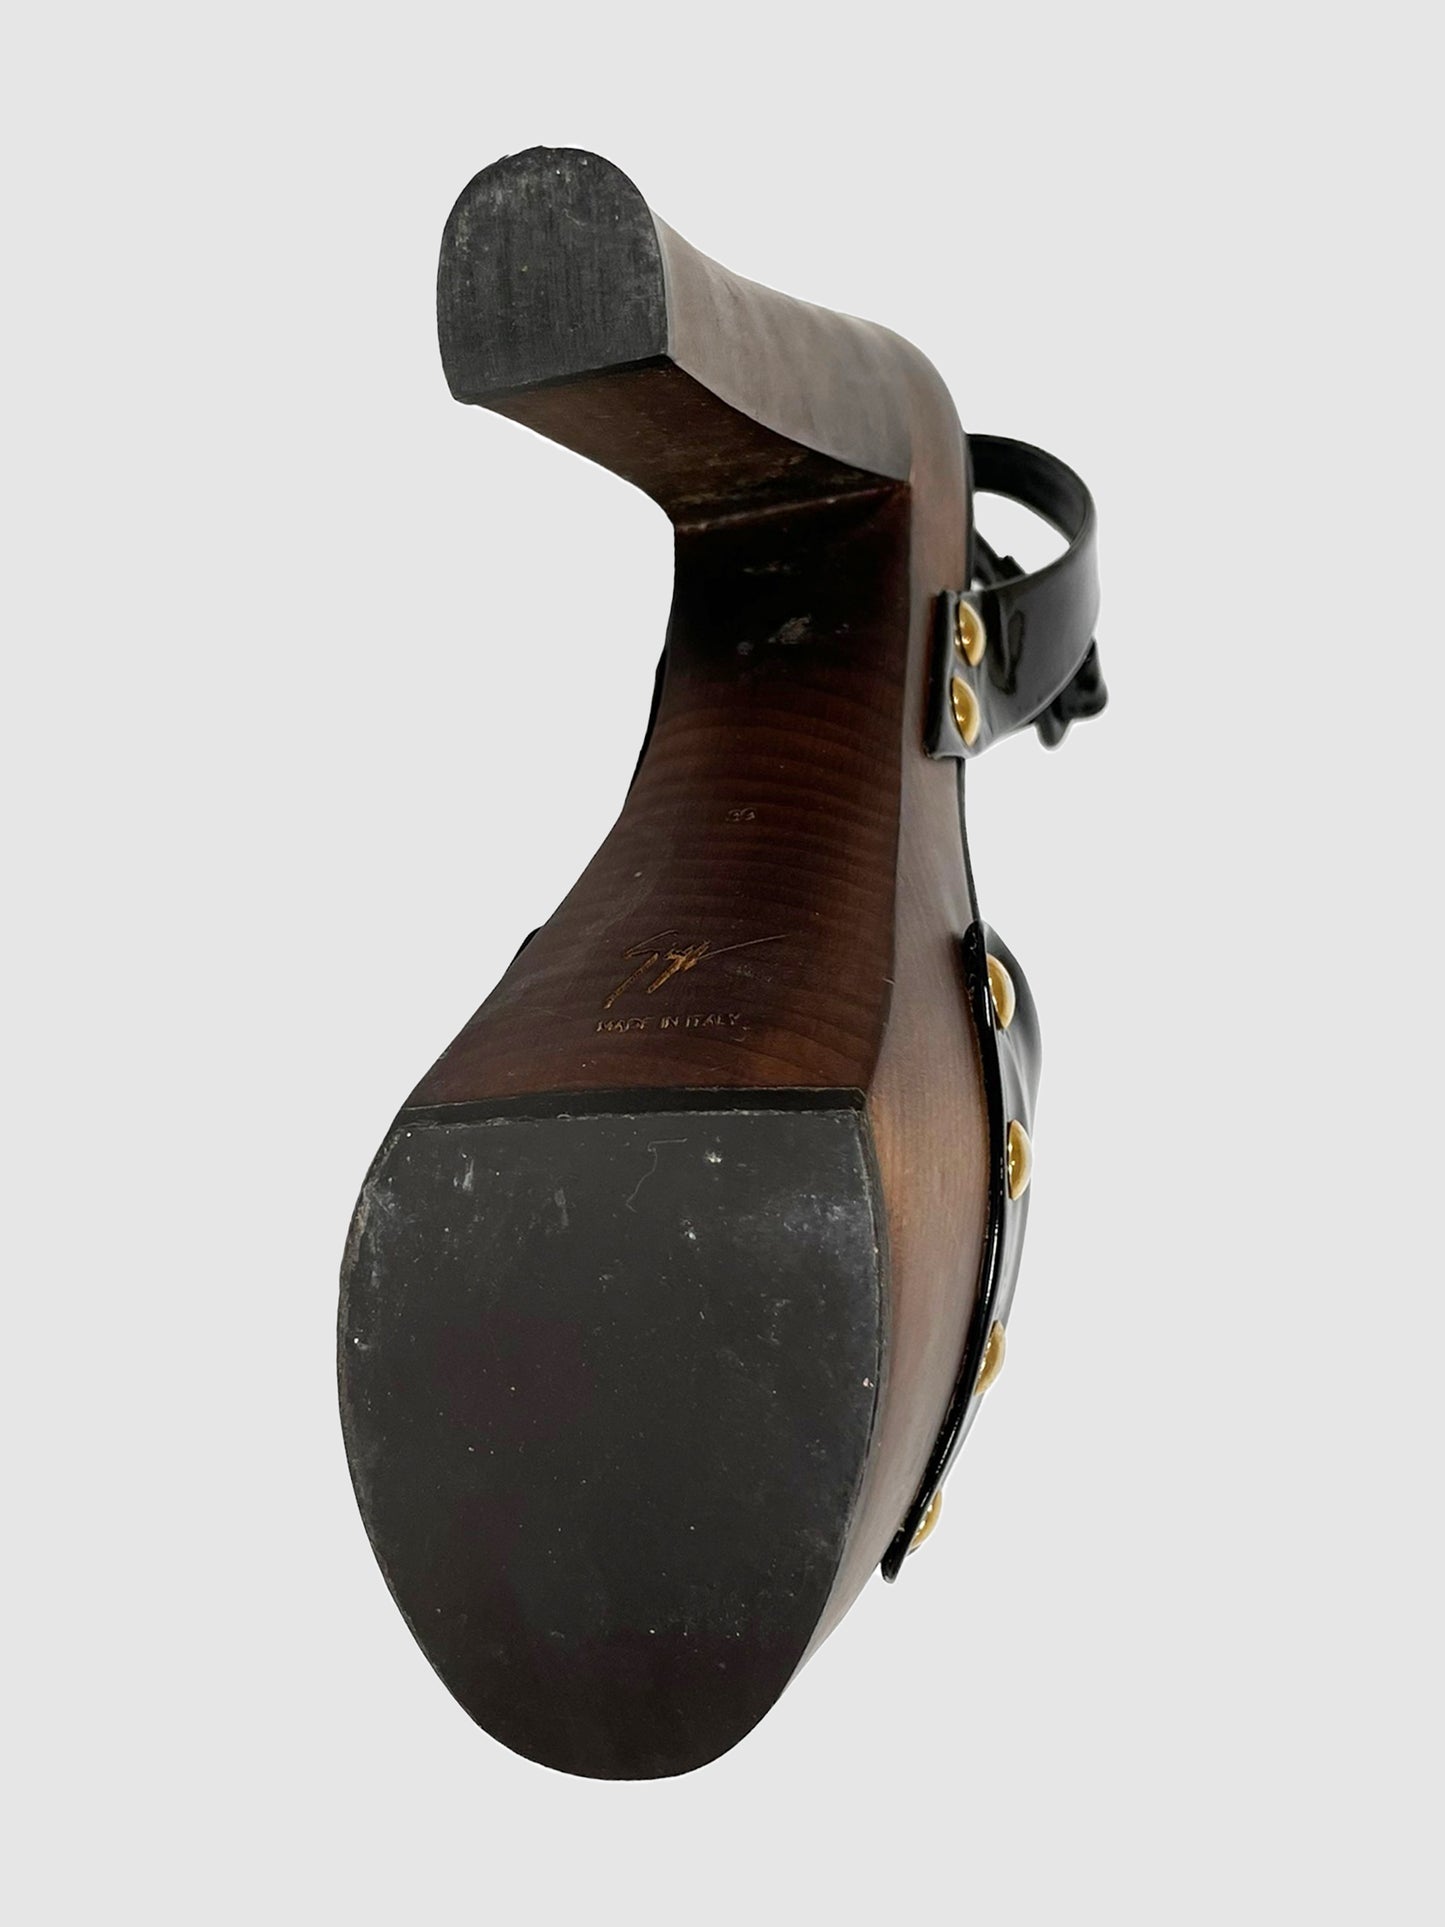 Giuseppe Zanotti Patent Leather Pumps with Wooden Platform - Size 39